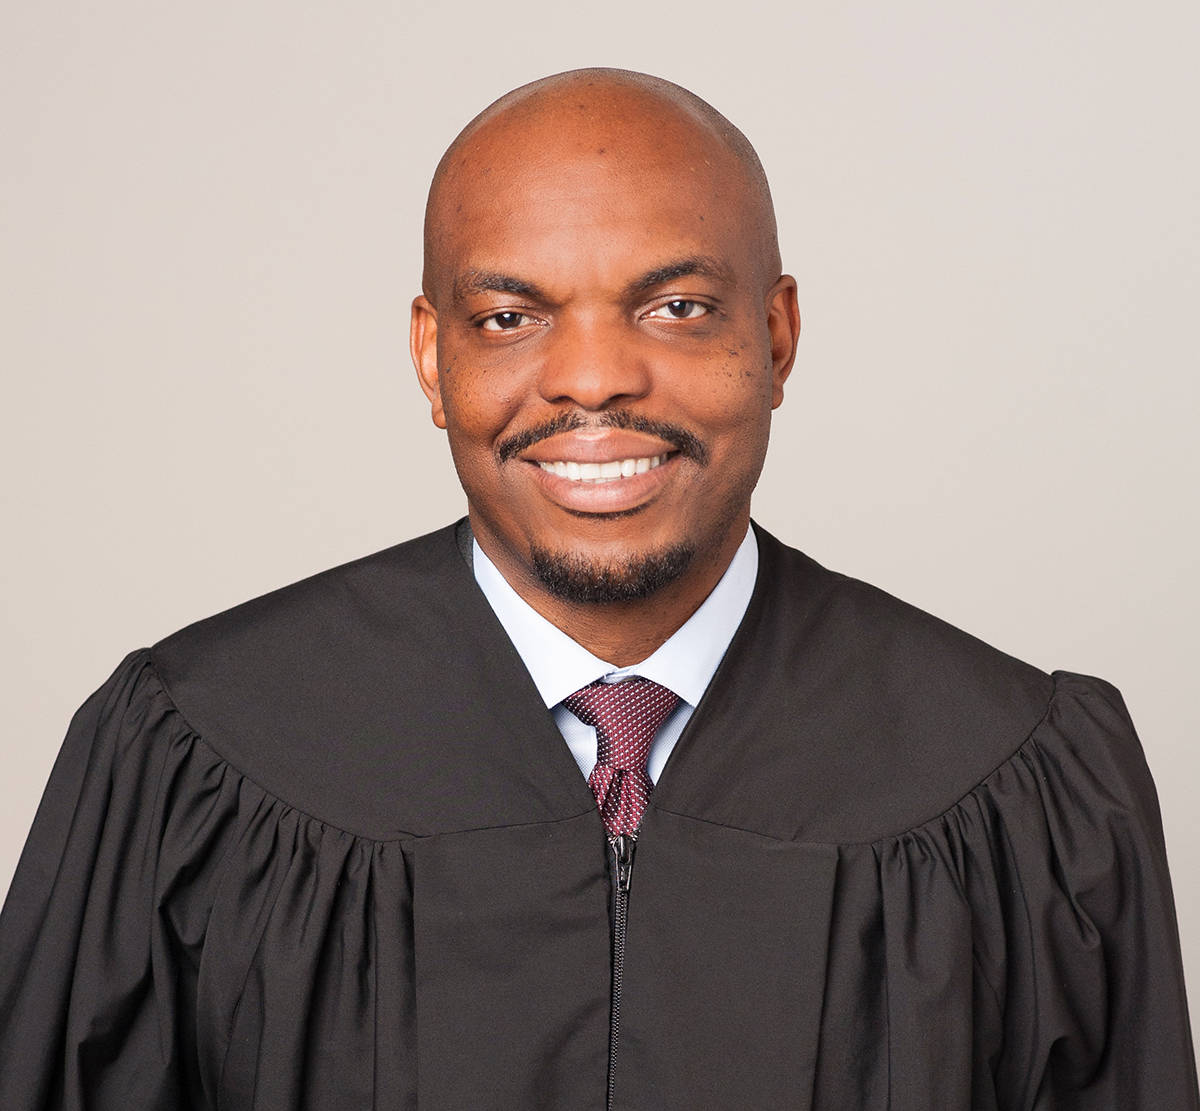 Snohomish County Judge Edirin Okoloko.